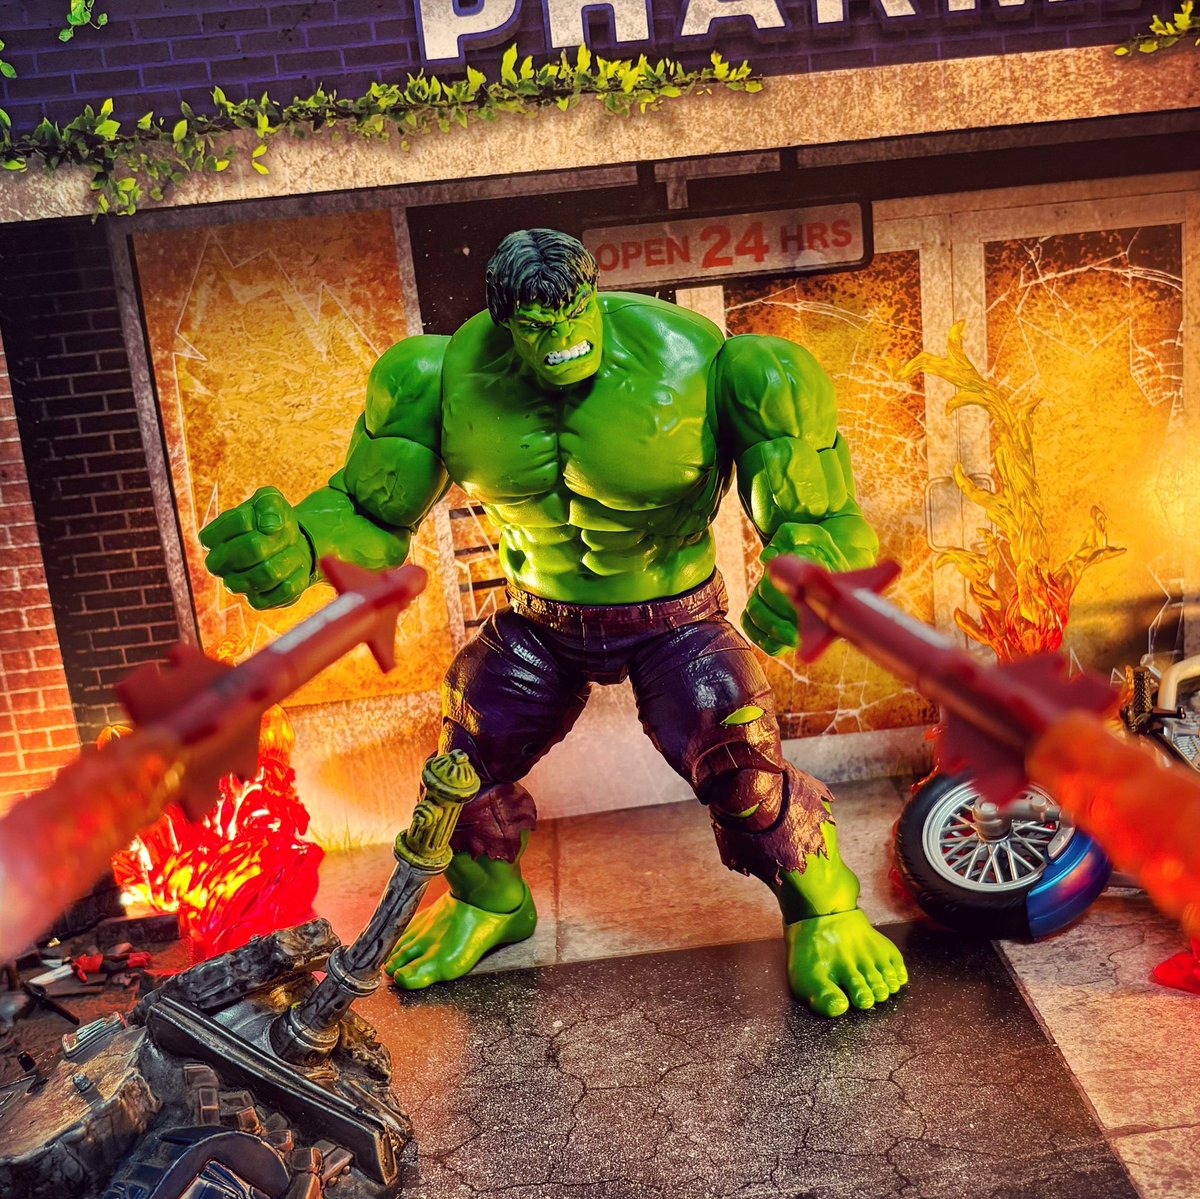 Puny rockets don’t hurt Hulk!
#marvelcomics #marveluniverse #marvelactionfigures #marvellegends #hulk #hulkcomics #actionfigurepics #actionfigurescollectors #one12scale #one12scalediorama #dioramaprints #hulkactionfigure